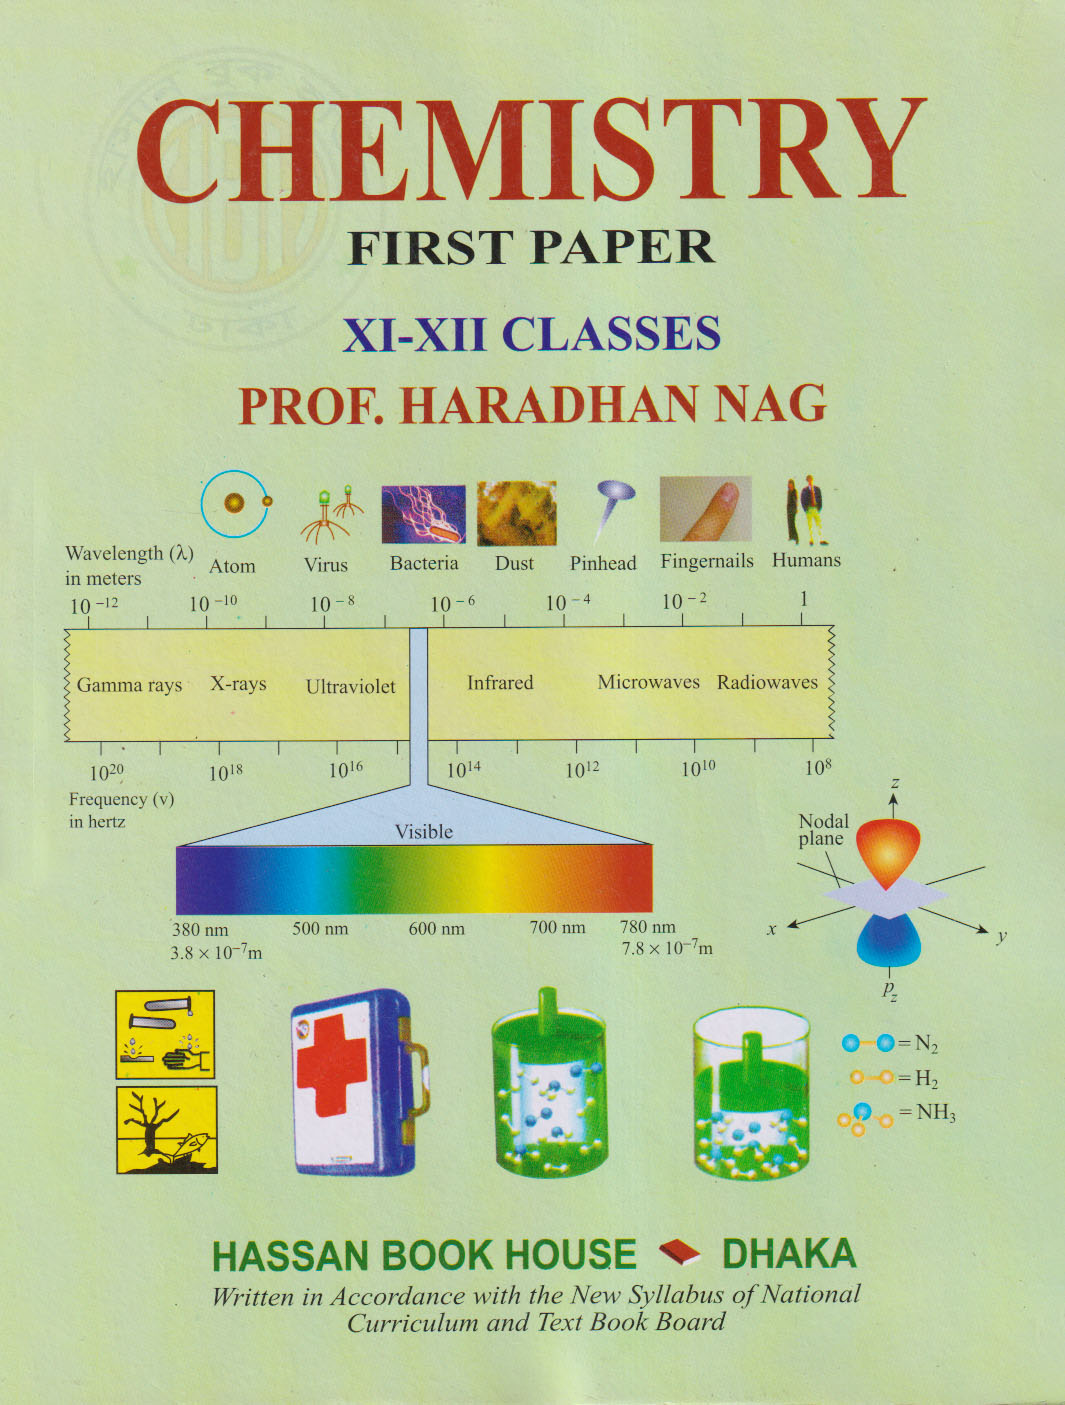 Chemistry First Paper (XI-XII Classes) - English Version (পেপারব্যাক)